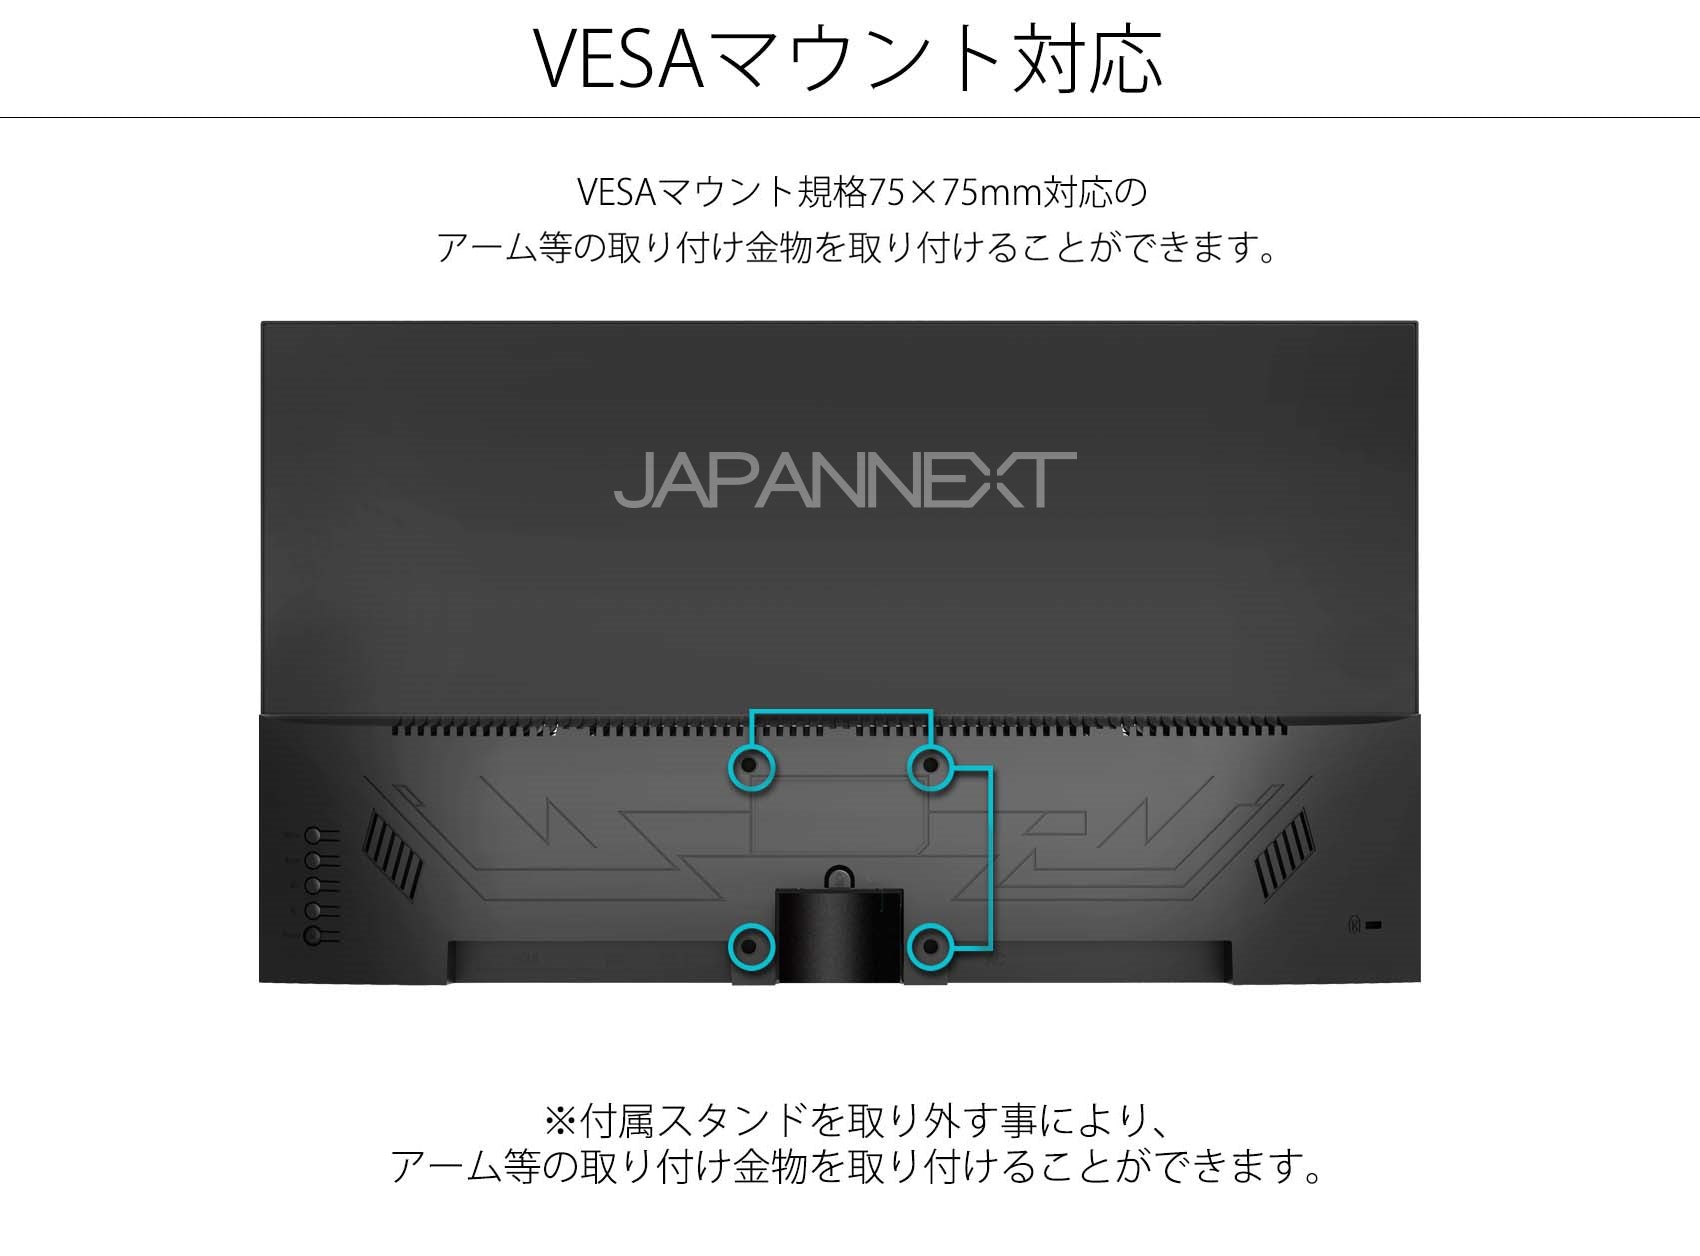 JAPANNEXT 21.5型 フルHD(1920x1080) 液晶モニター JN-V2150FHD HDMI VGA